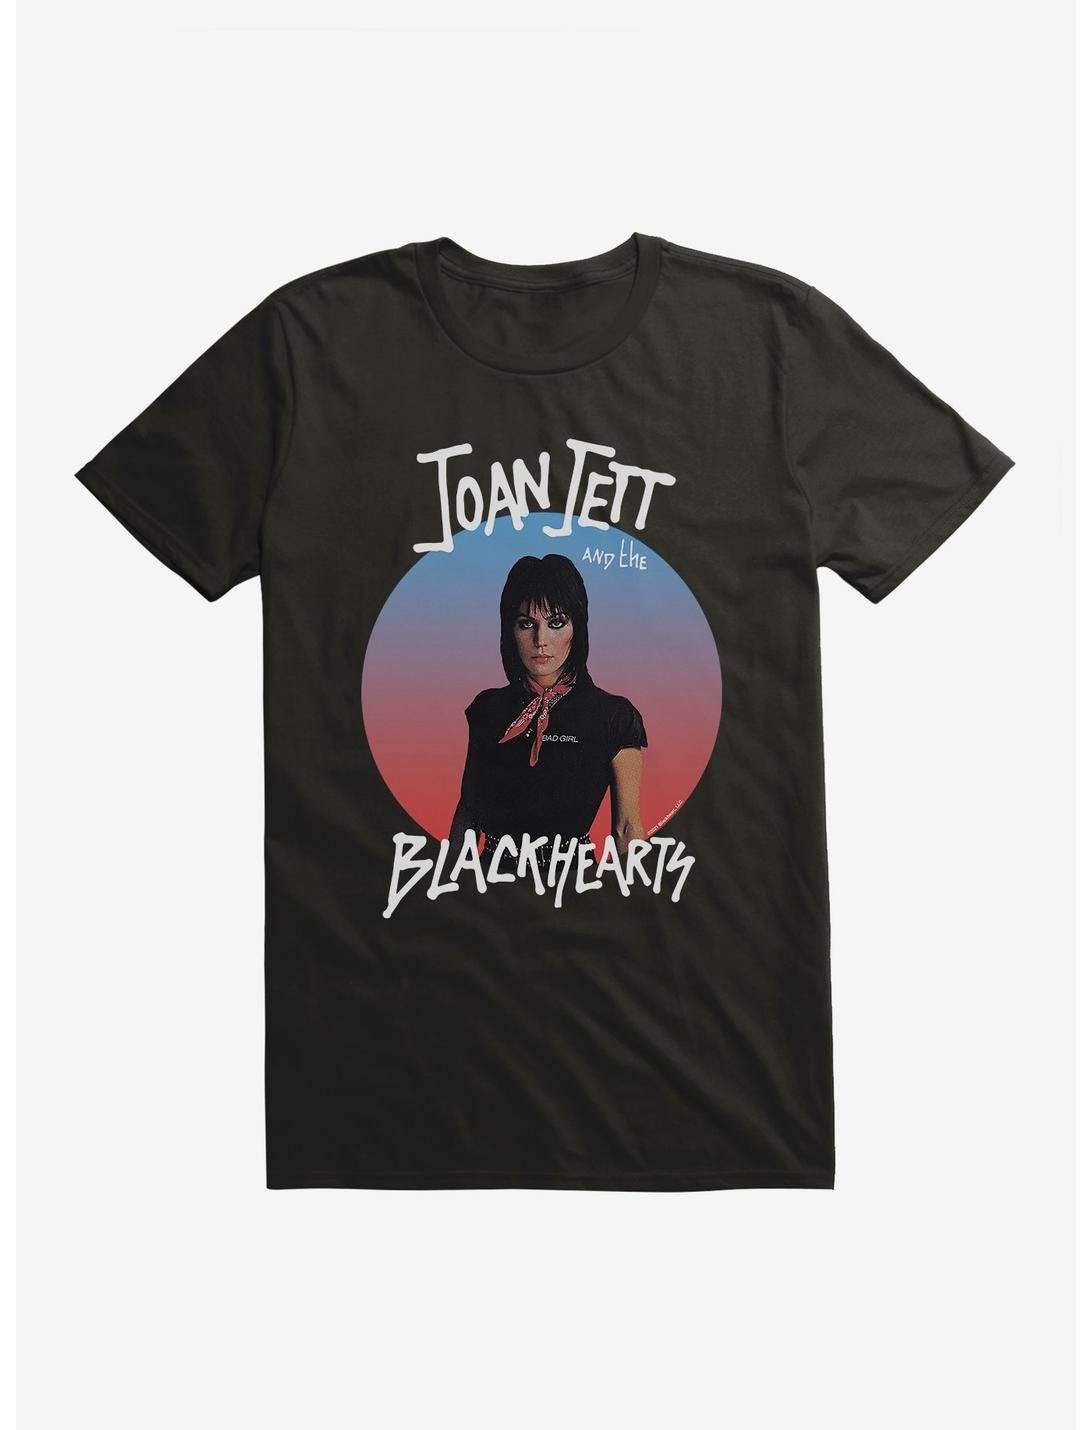 Joan Jett Crimson And Clover Album Art T-Shirt, , hi-res